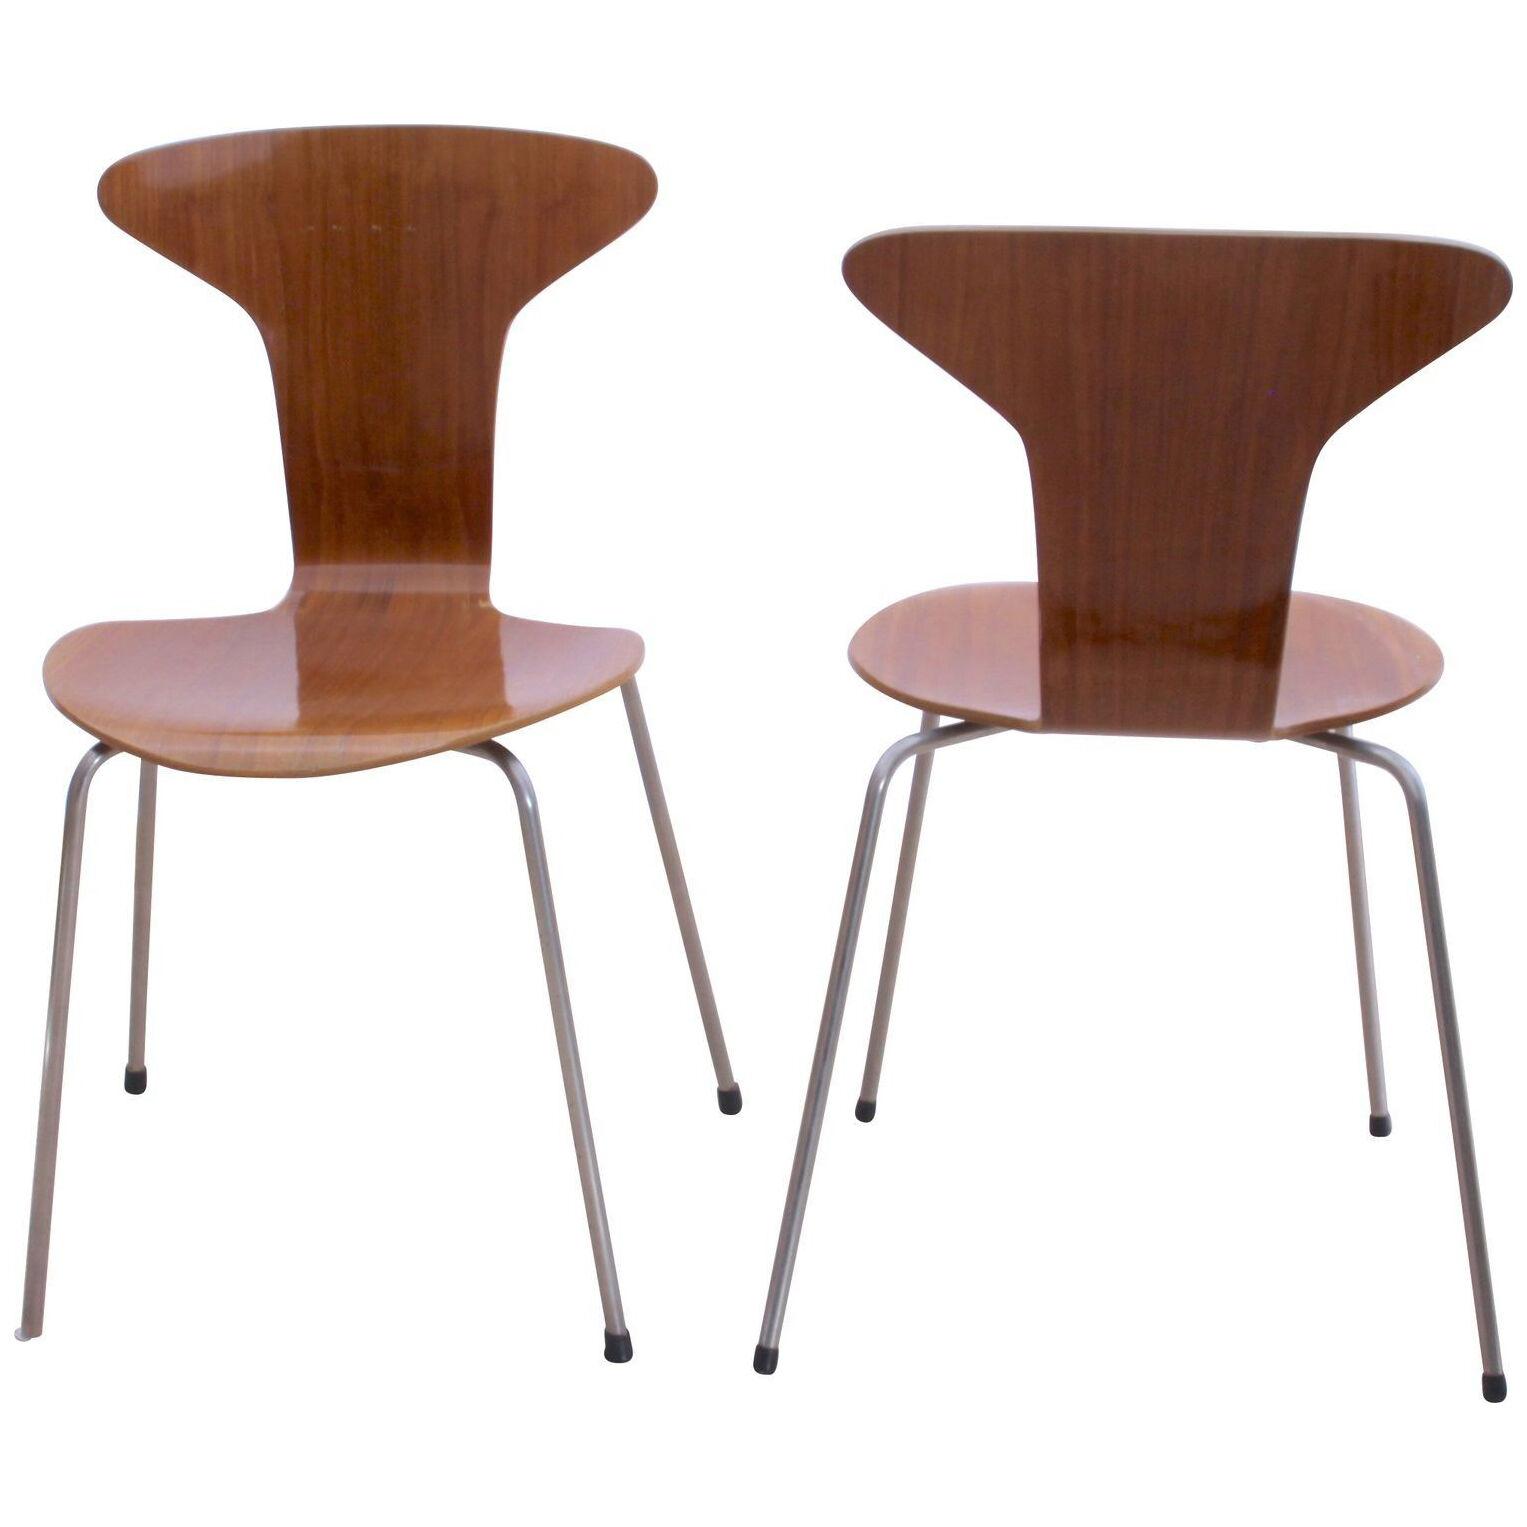 Pair of 3105 'Mosquito' Chairs by Arne Jacobsen, F. Hansen, Teak, Denmark, 1950s